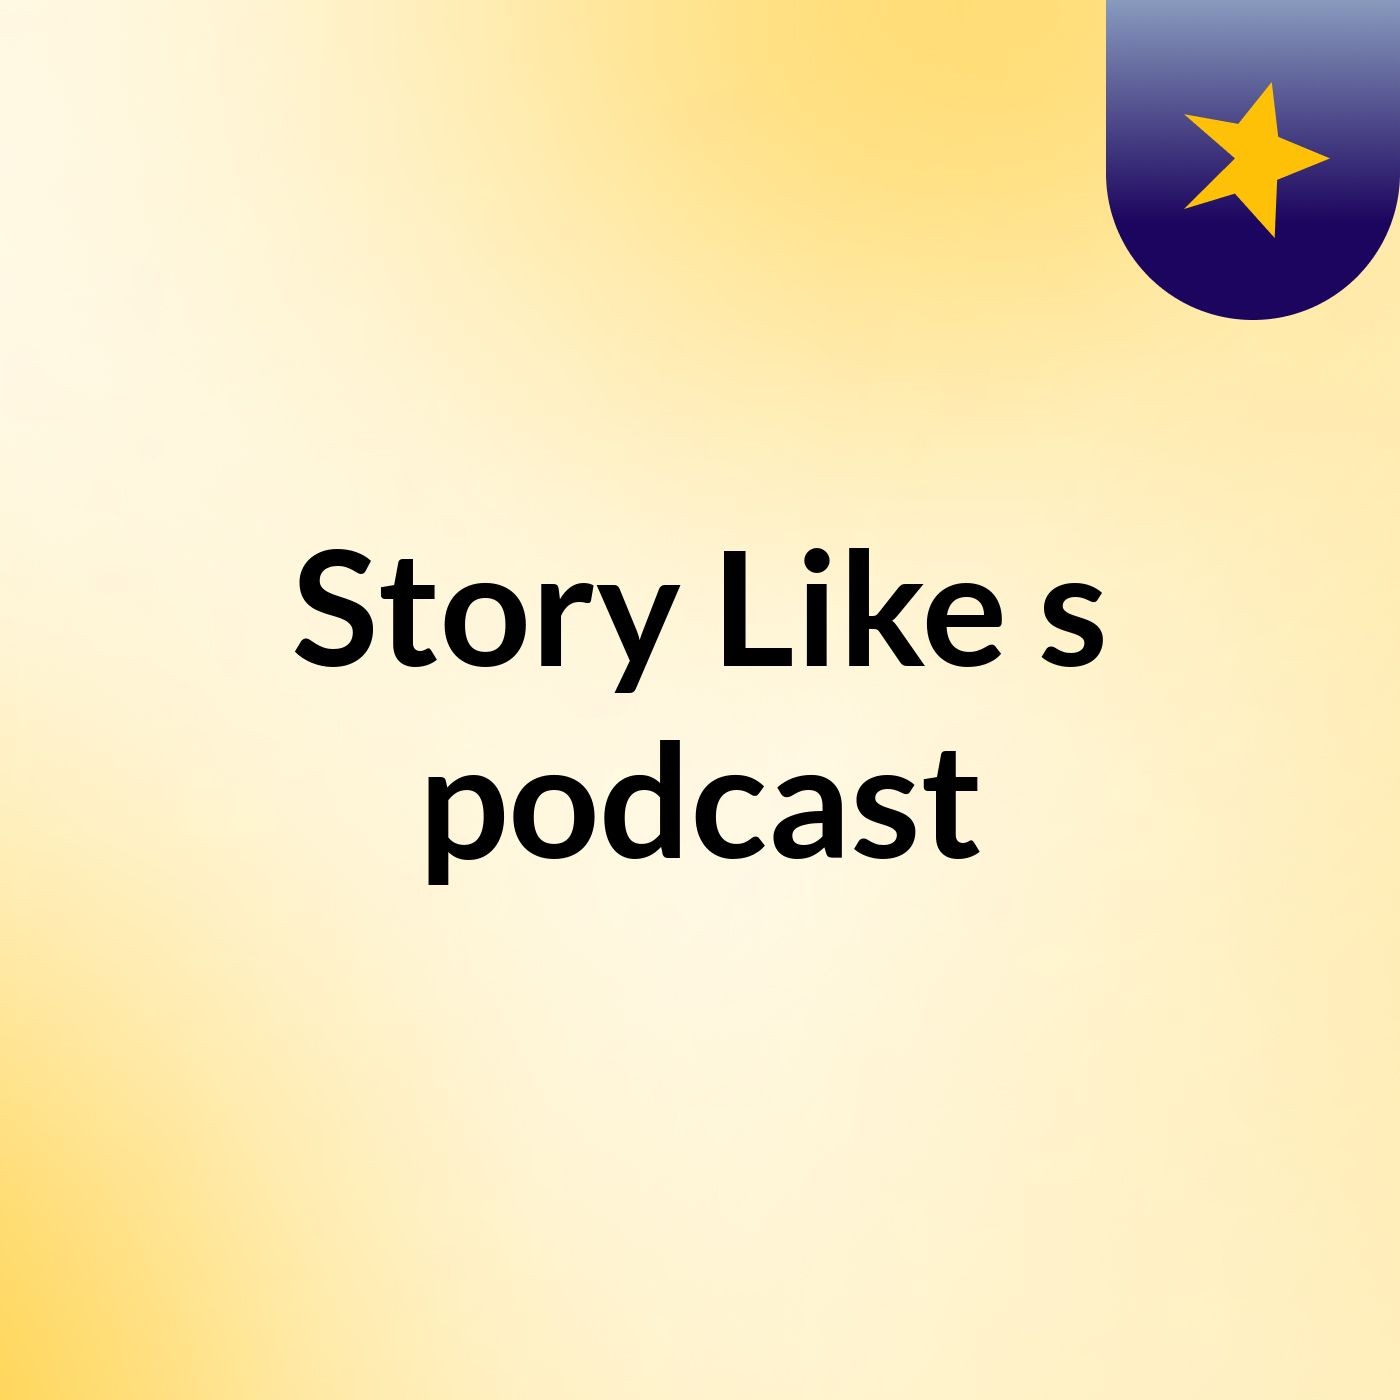 Episode 3 - Story Like's podcast